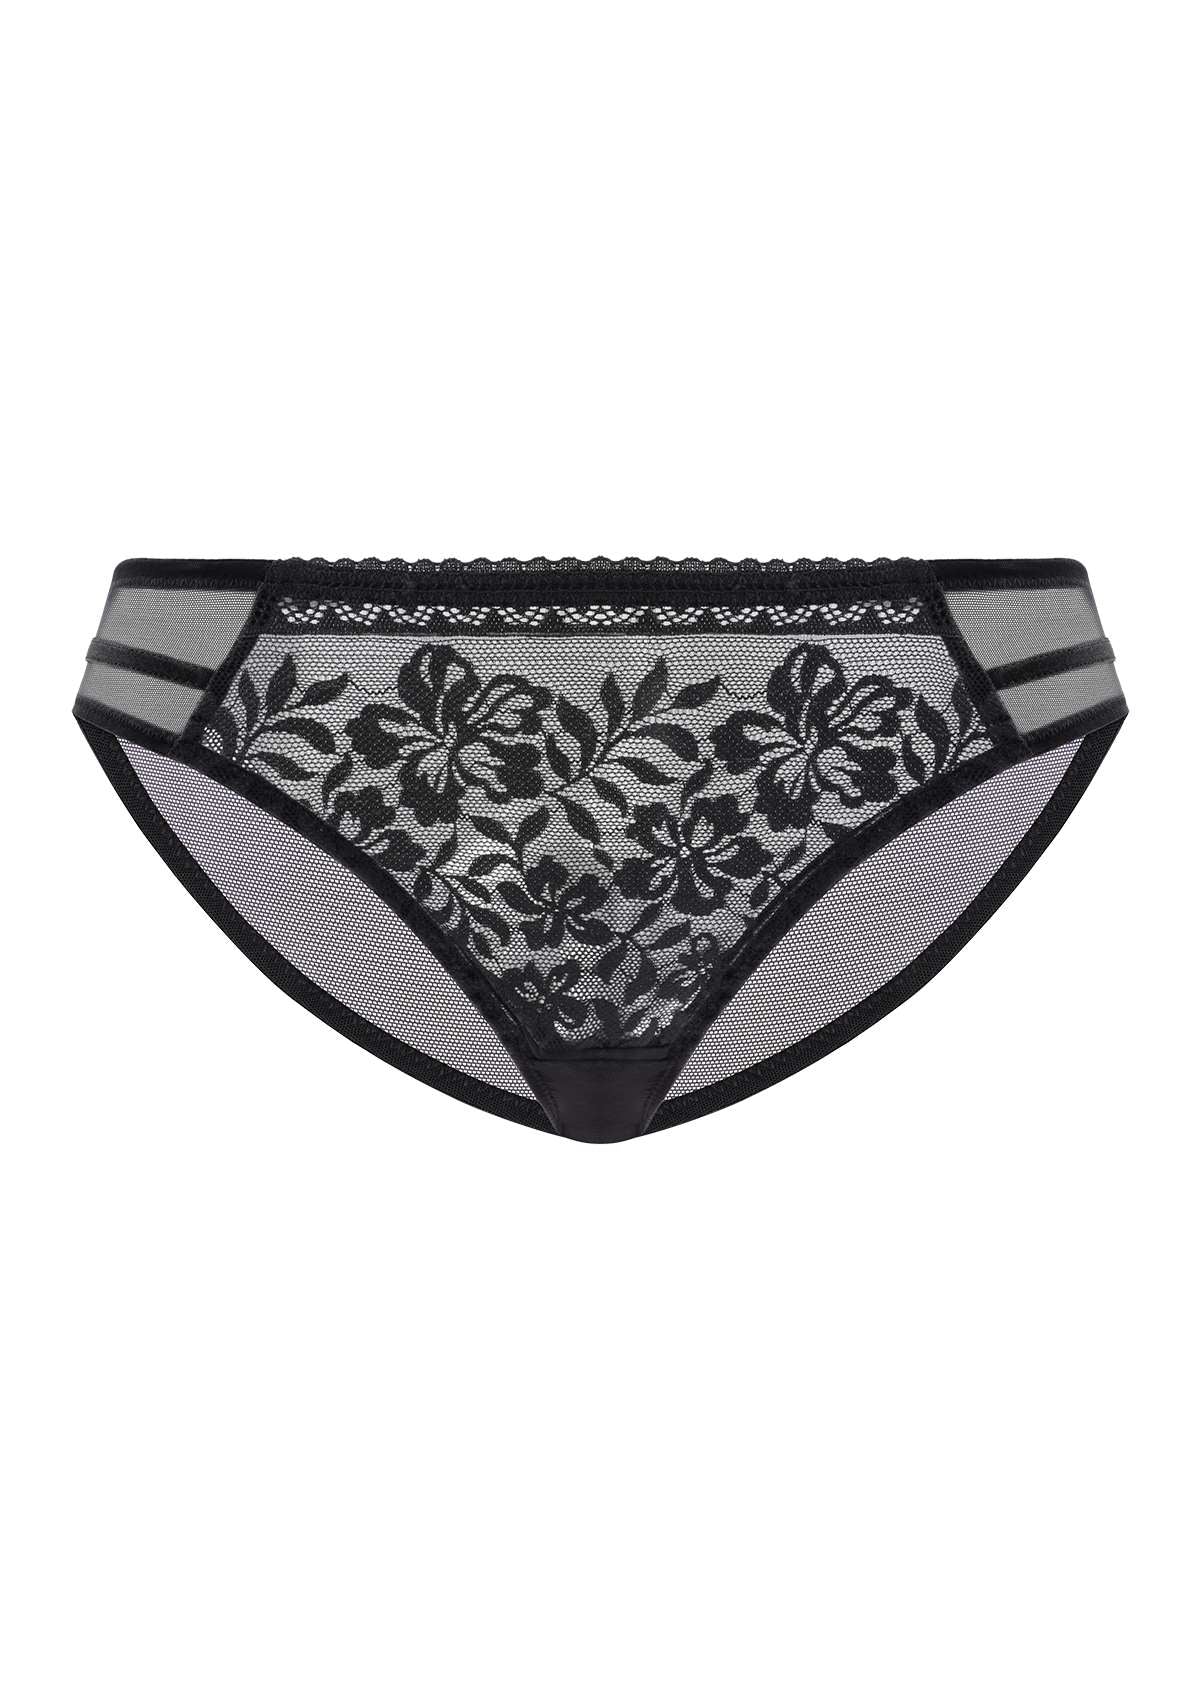 HSIA Gladioli Floral Lace Mesh Airy Elegant Beautiful Bikini Underwear - XL / Black